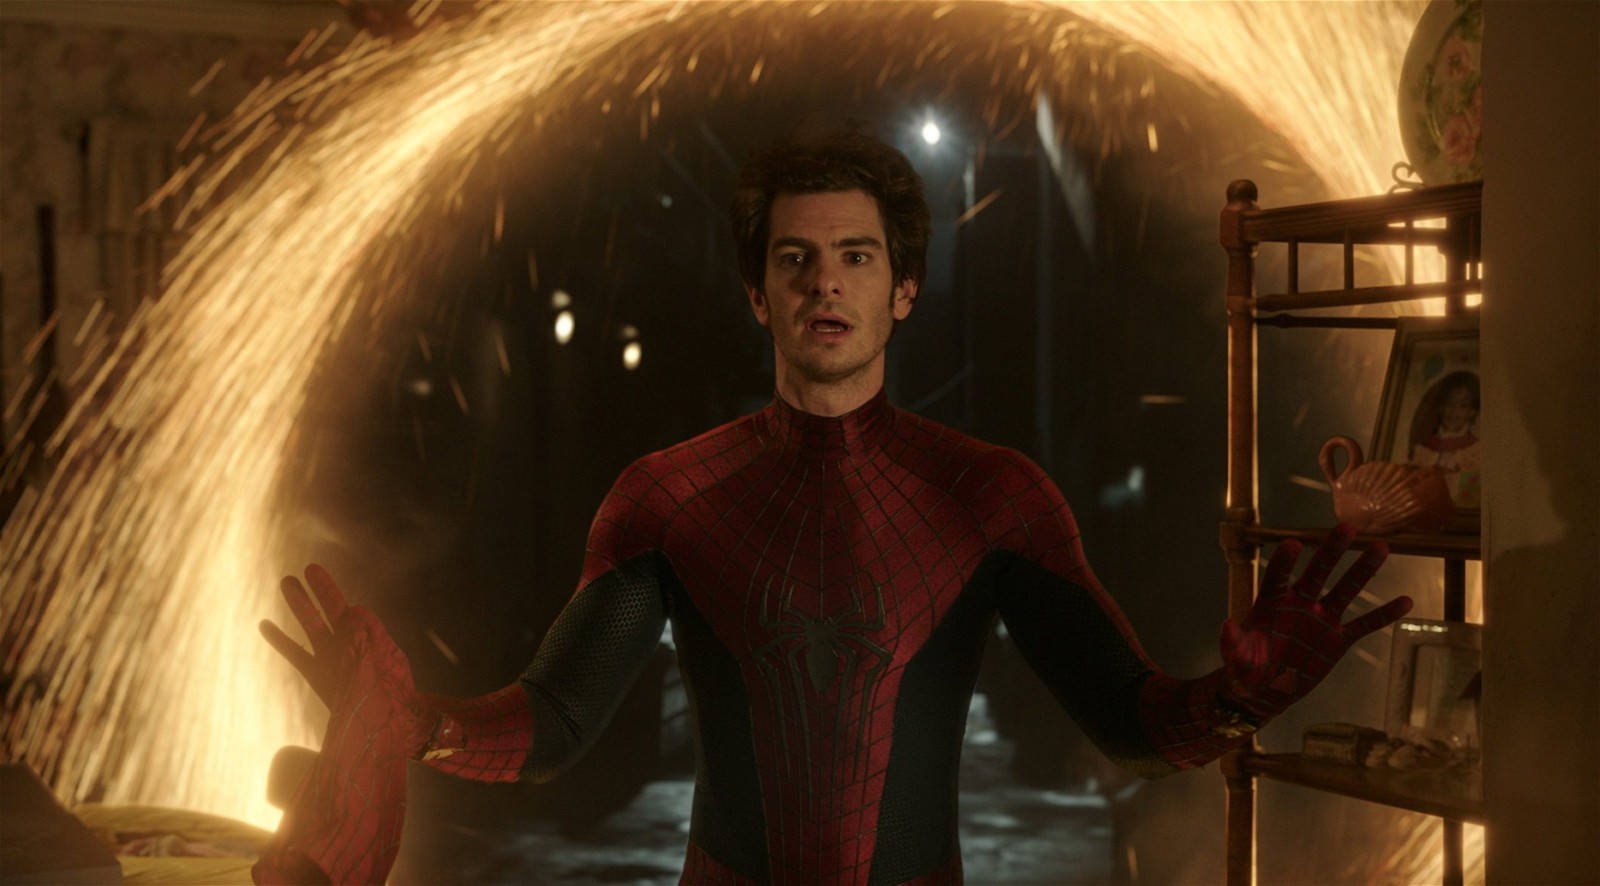 Andrew Garfield in Spider-Man: No Way Home